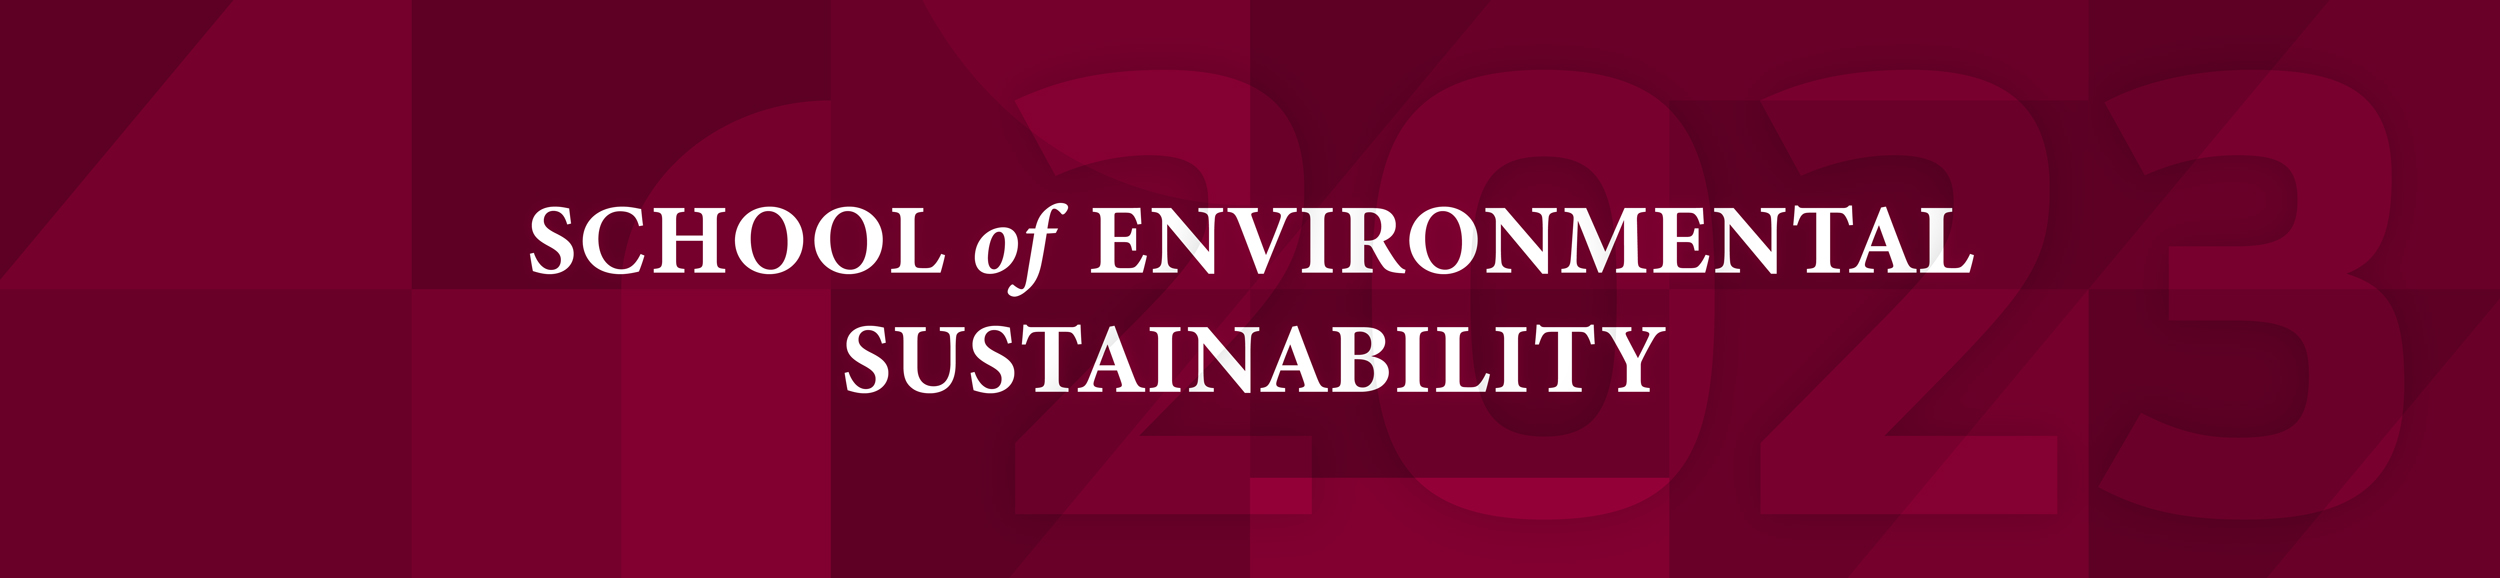 School of Environmental Sustainability